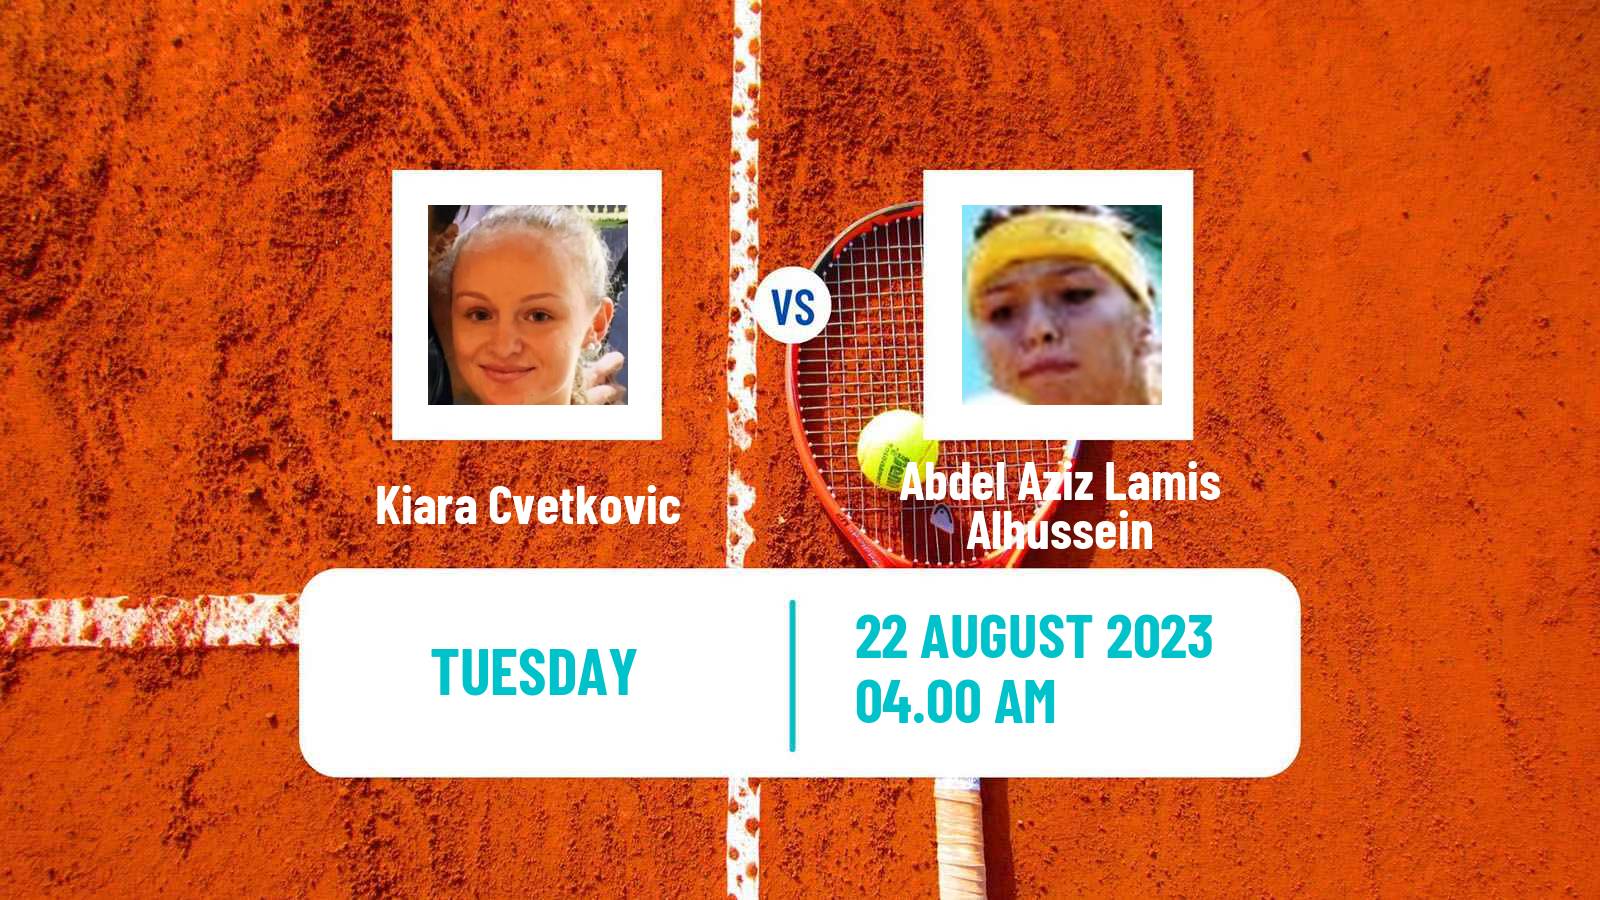 Tennis ITF W15 Monastir 51 Women Kiara Cvetkovic - Abdel Aziz Lamis Alhussein